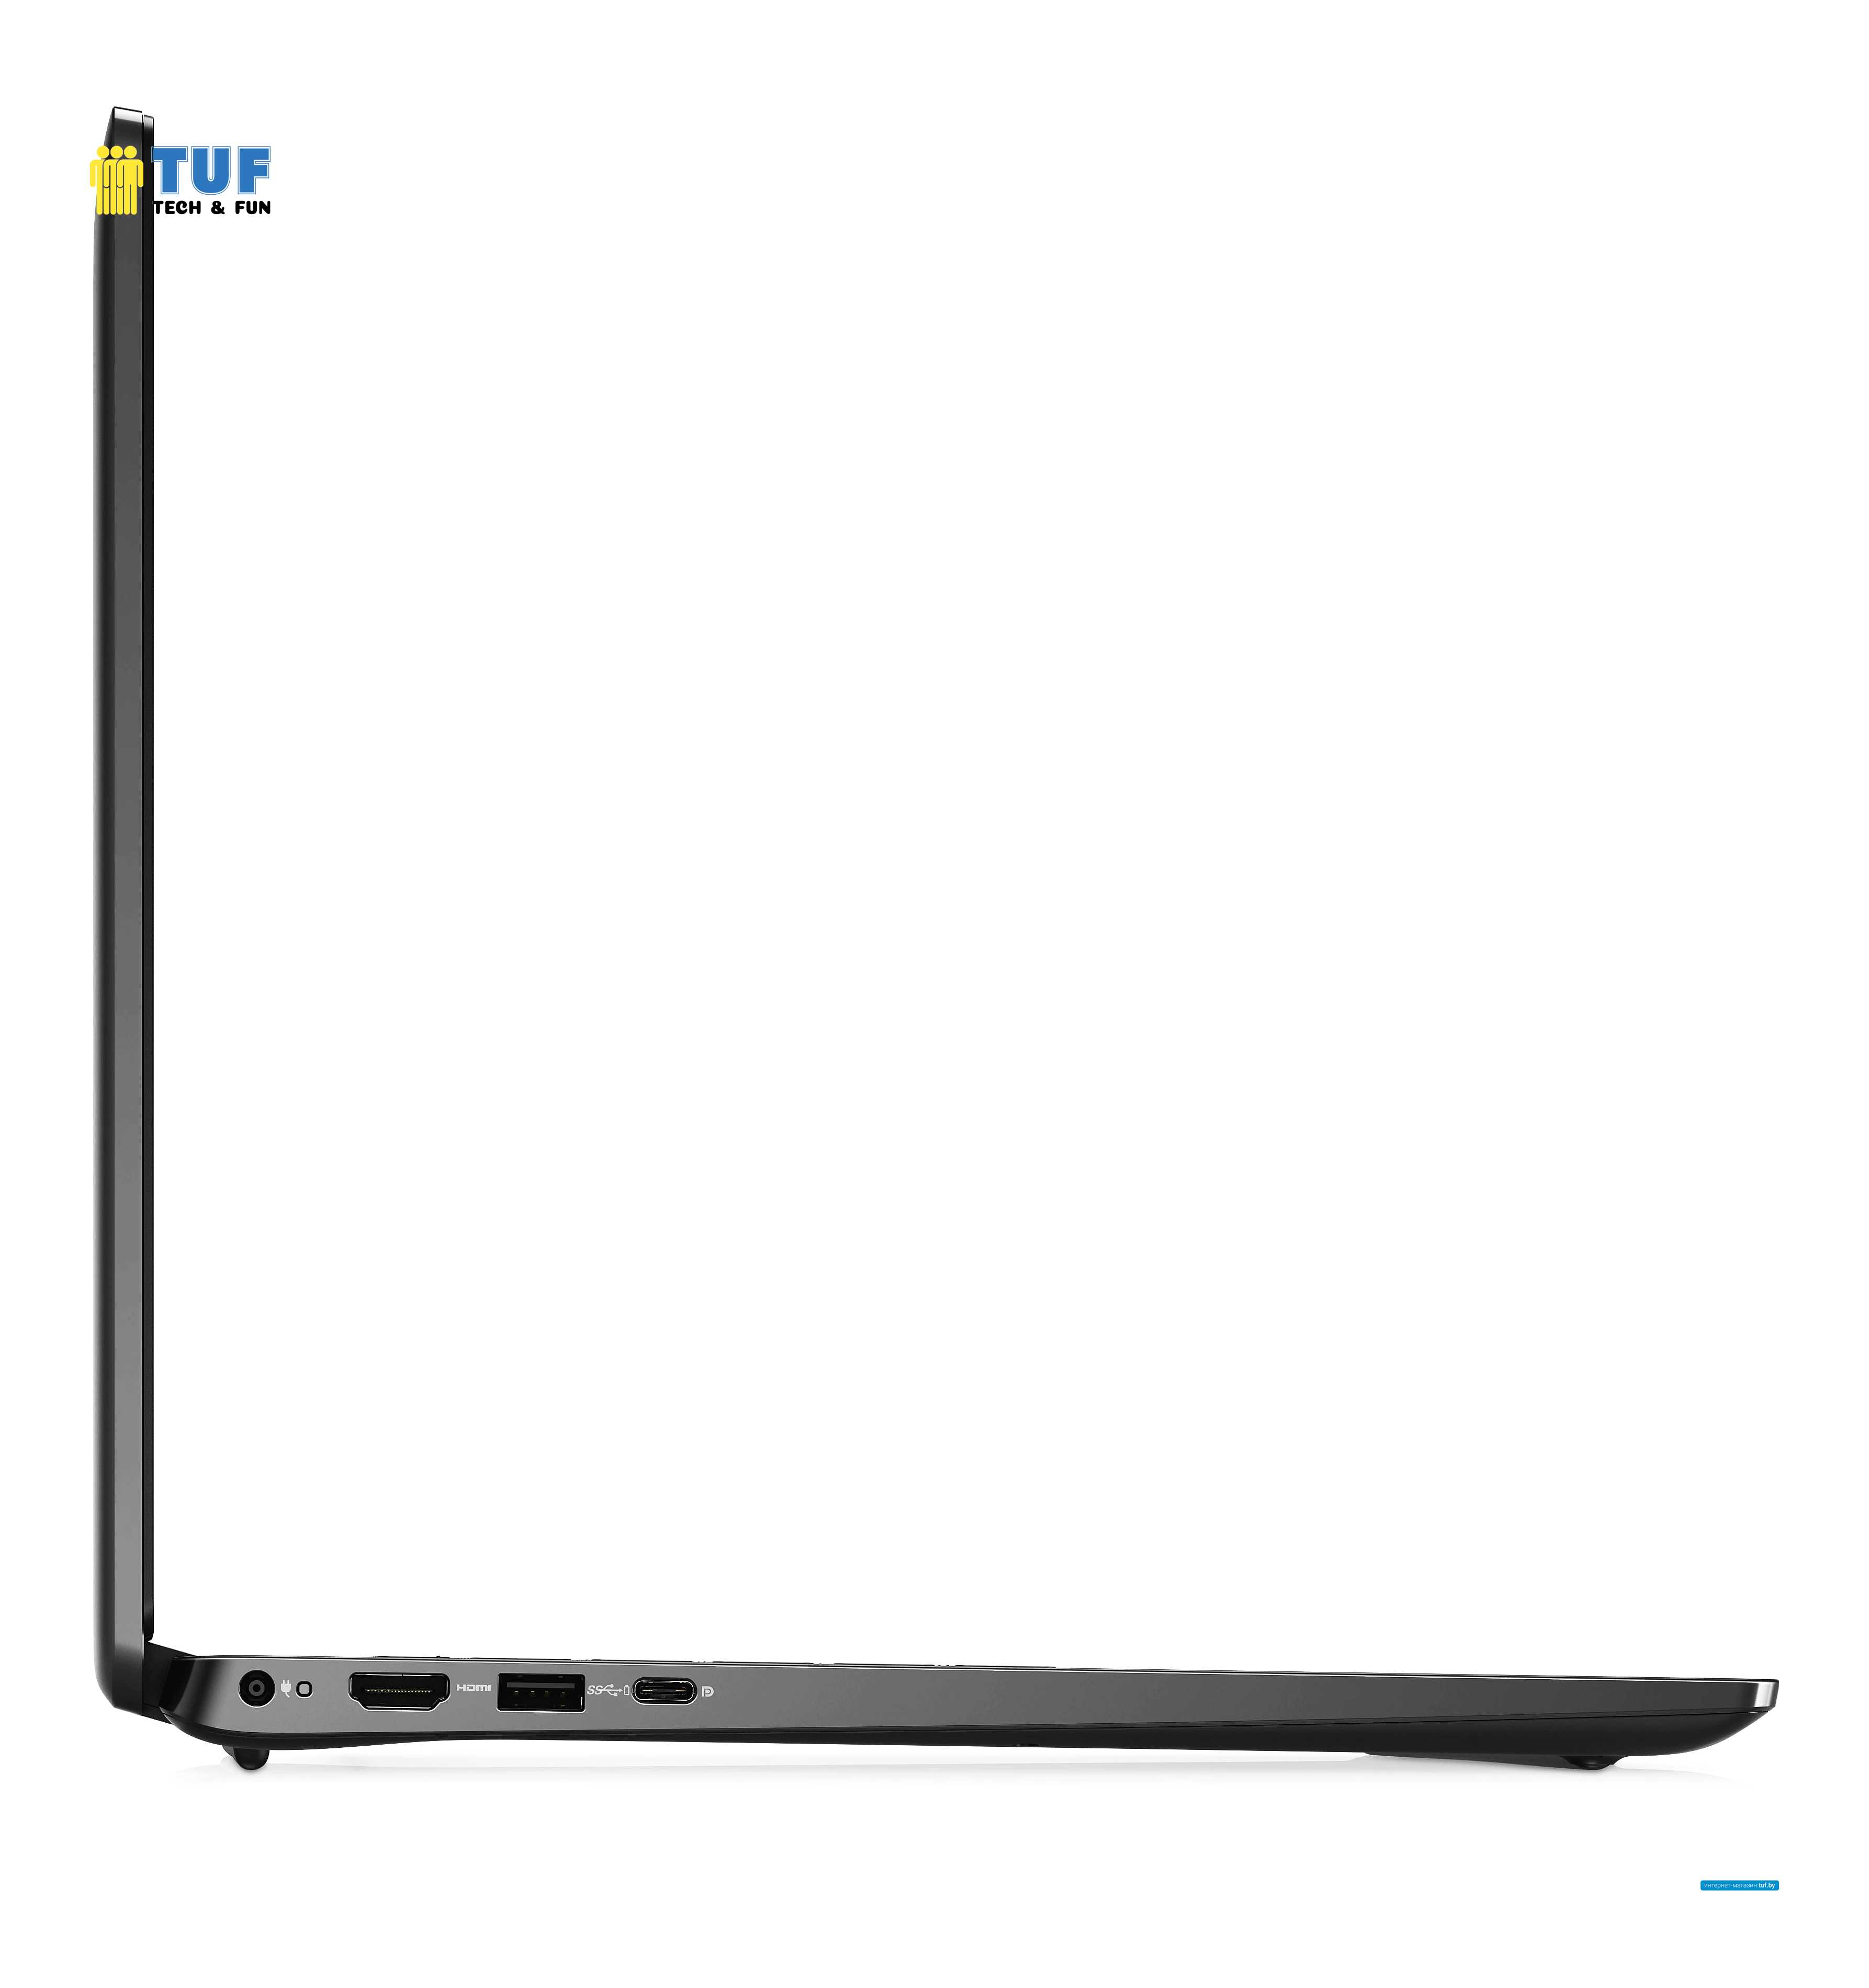 Ноутбук Dell Latitude 15 3520-2361